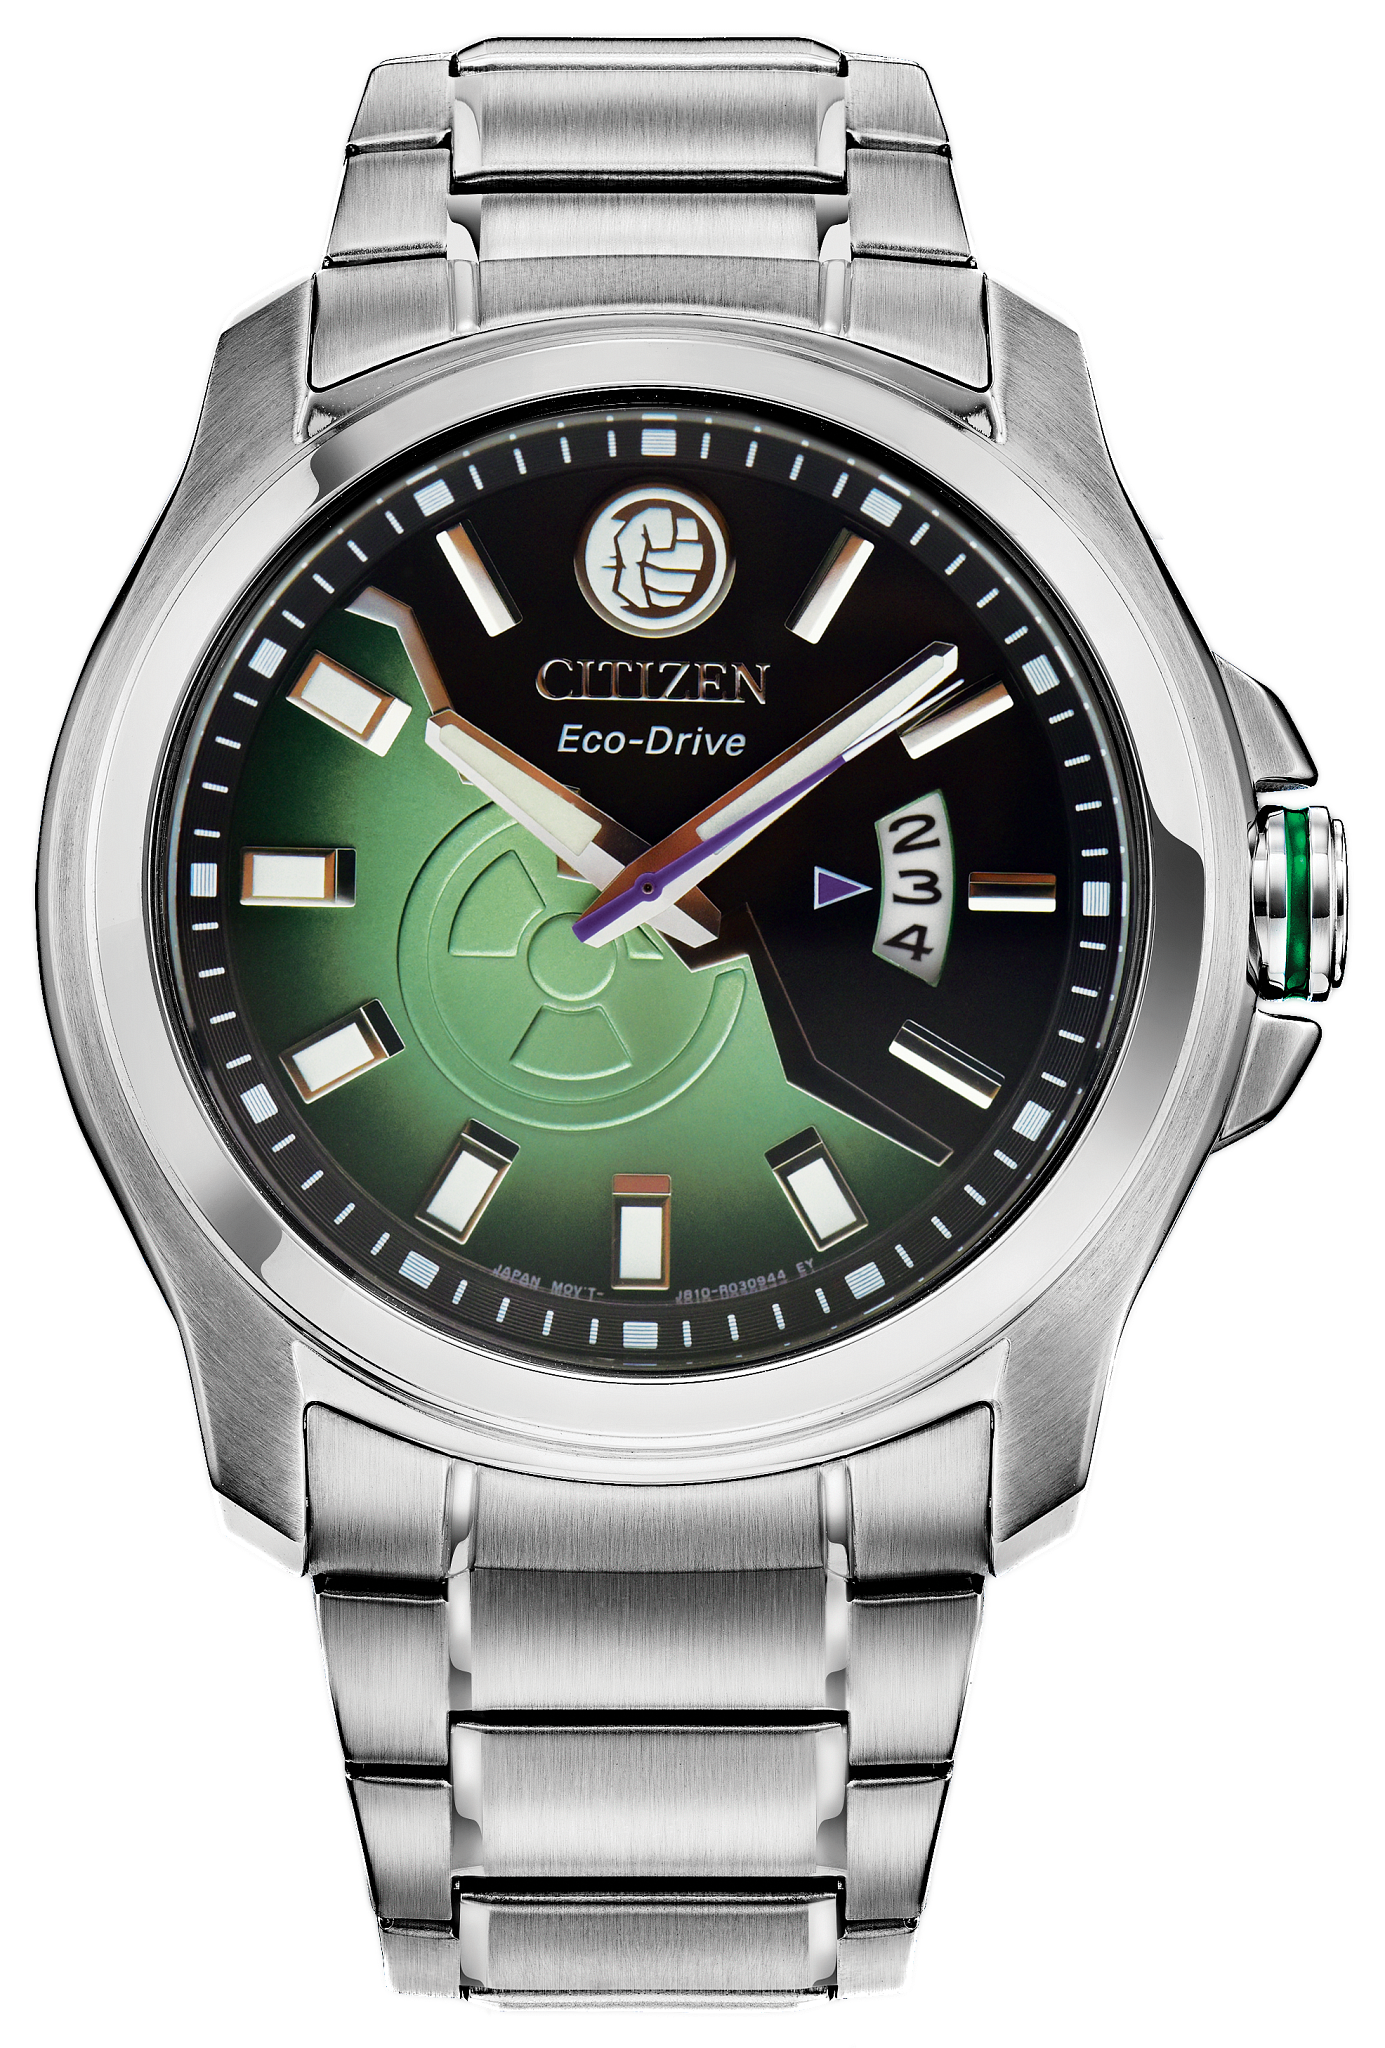 Steeldive Watch Store Deal | Submariner Mechanical Watches | Steeldives